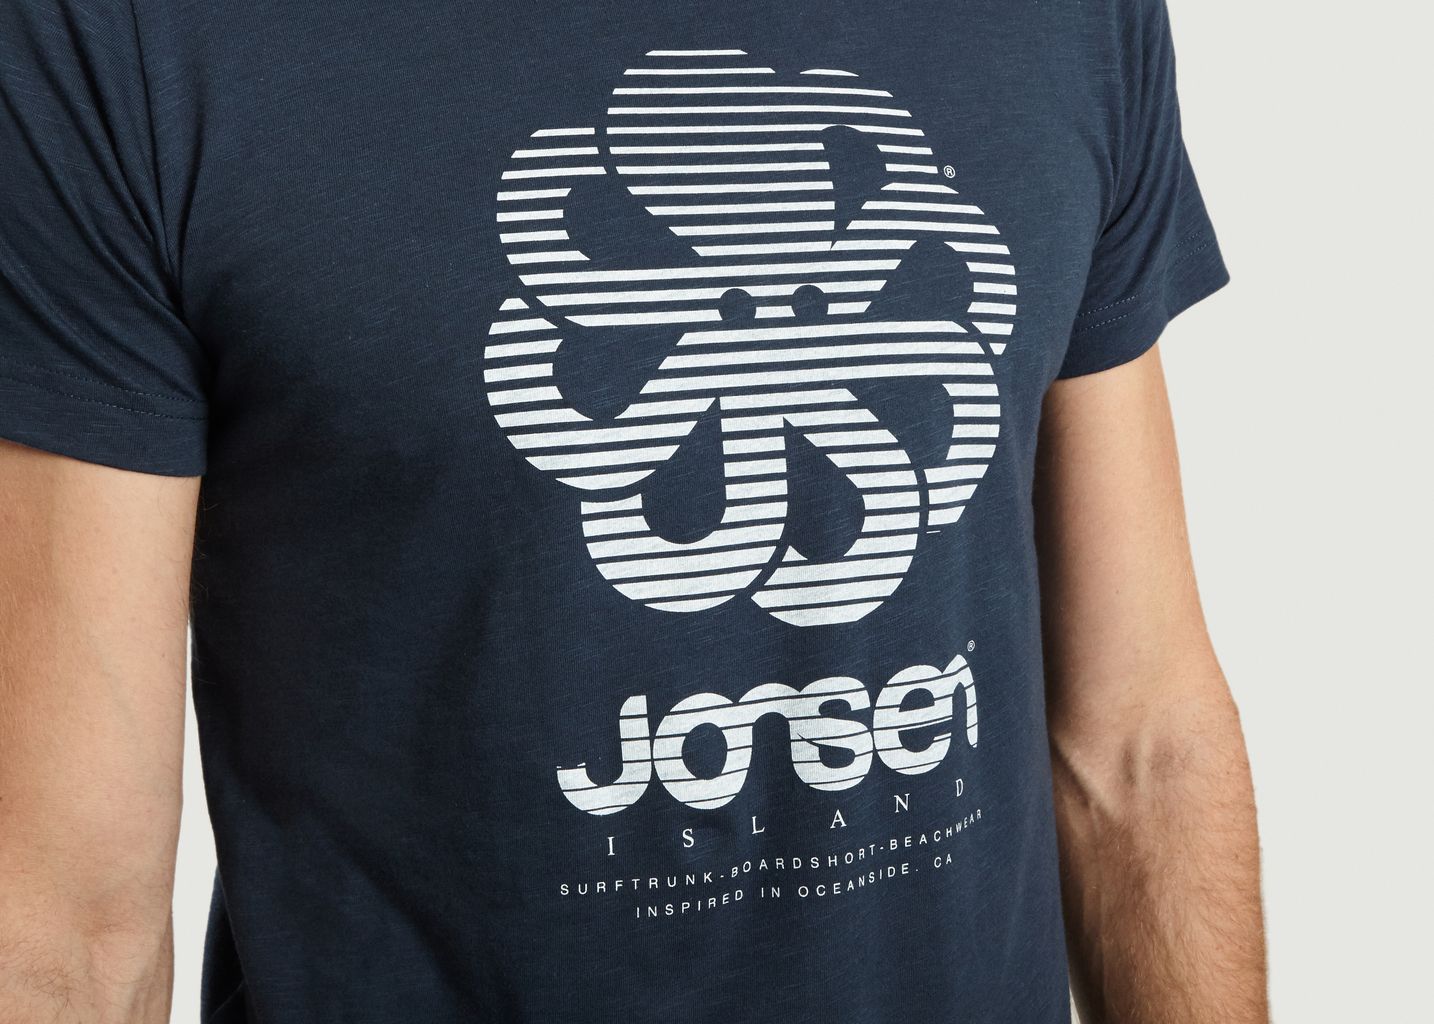 Classic Super Big T-shirt - Jonsen Island